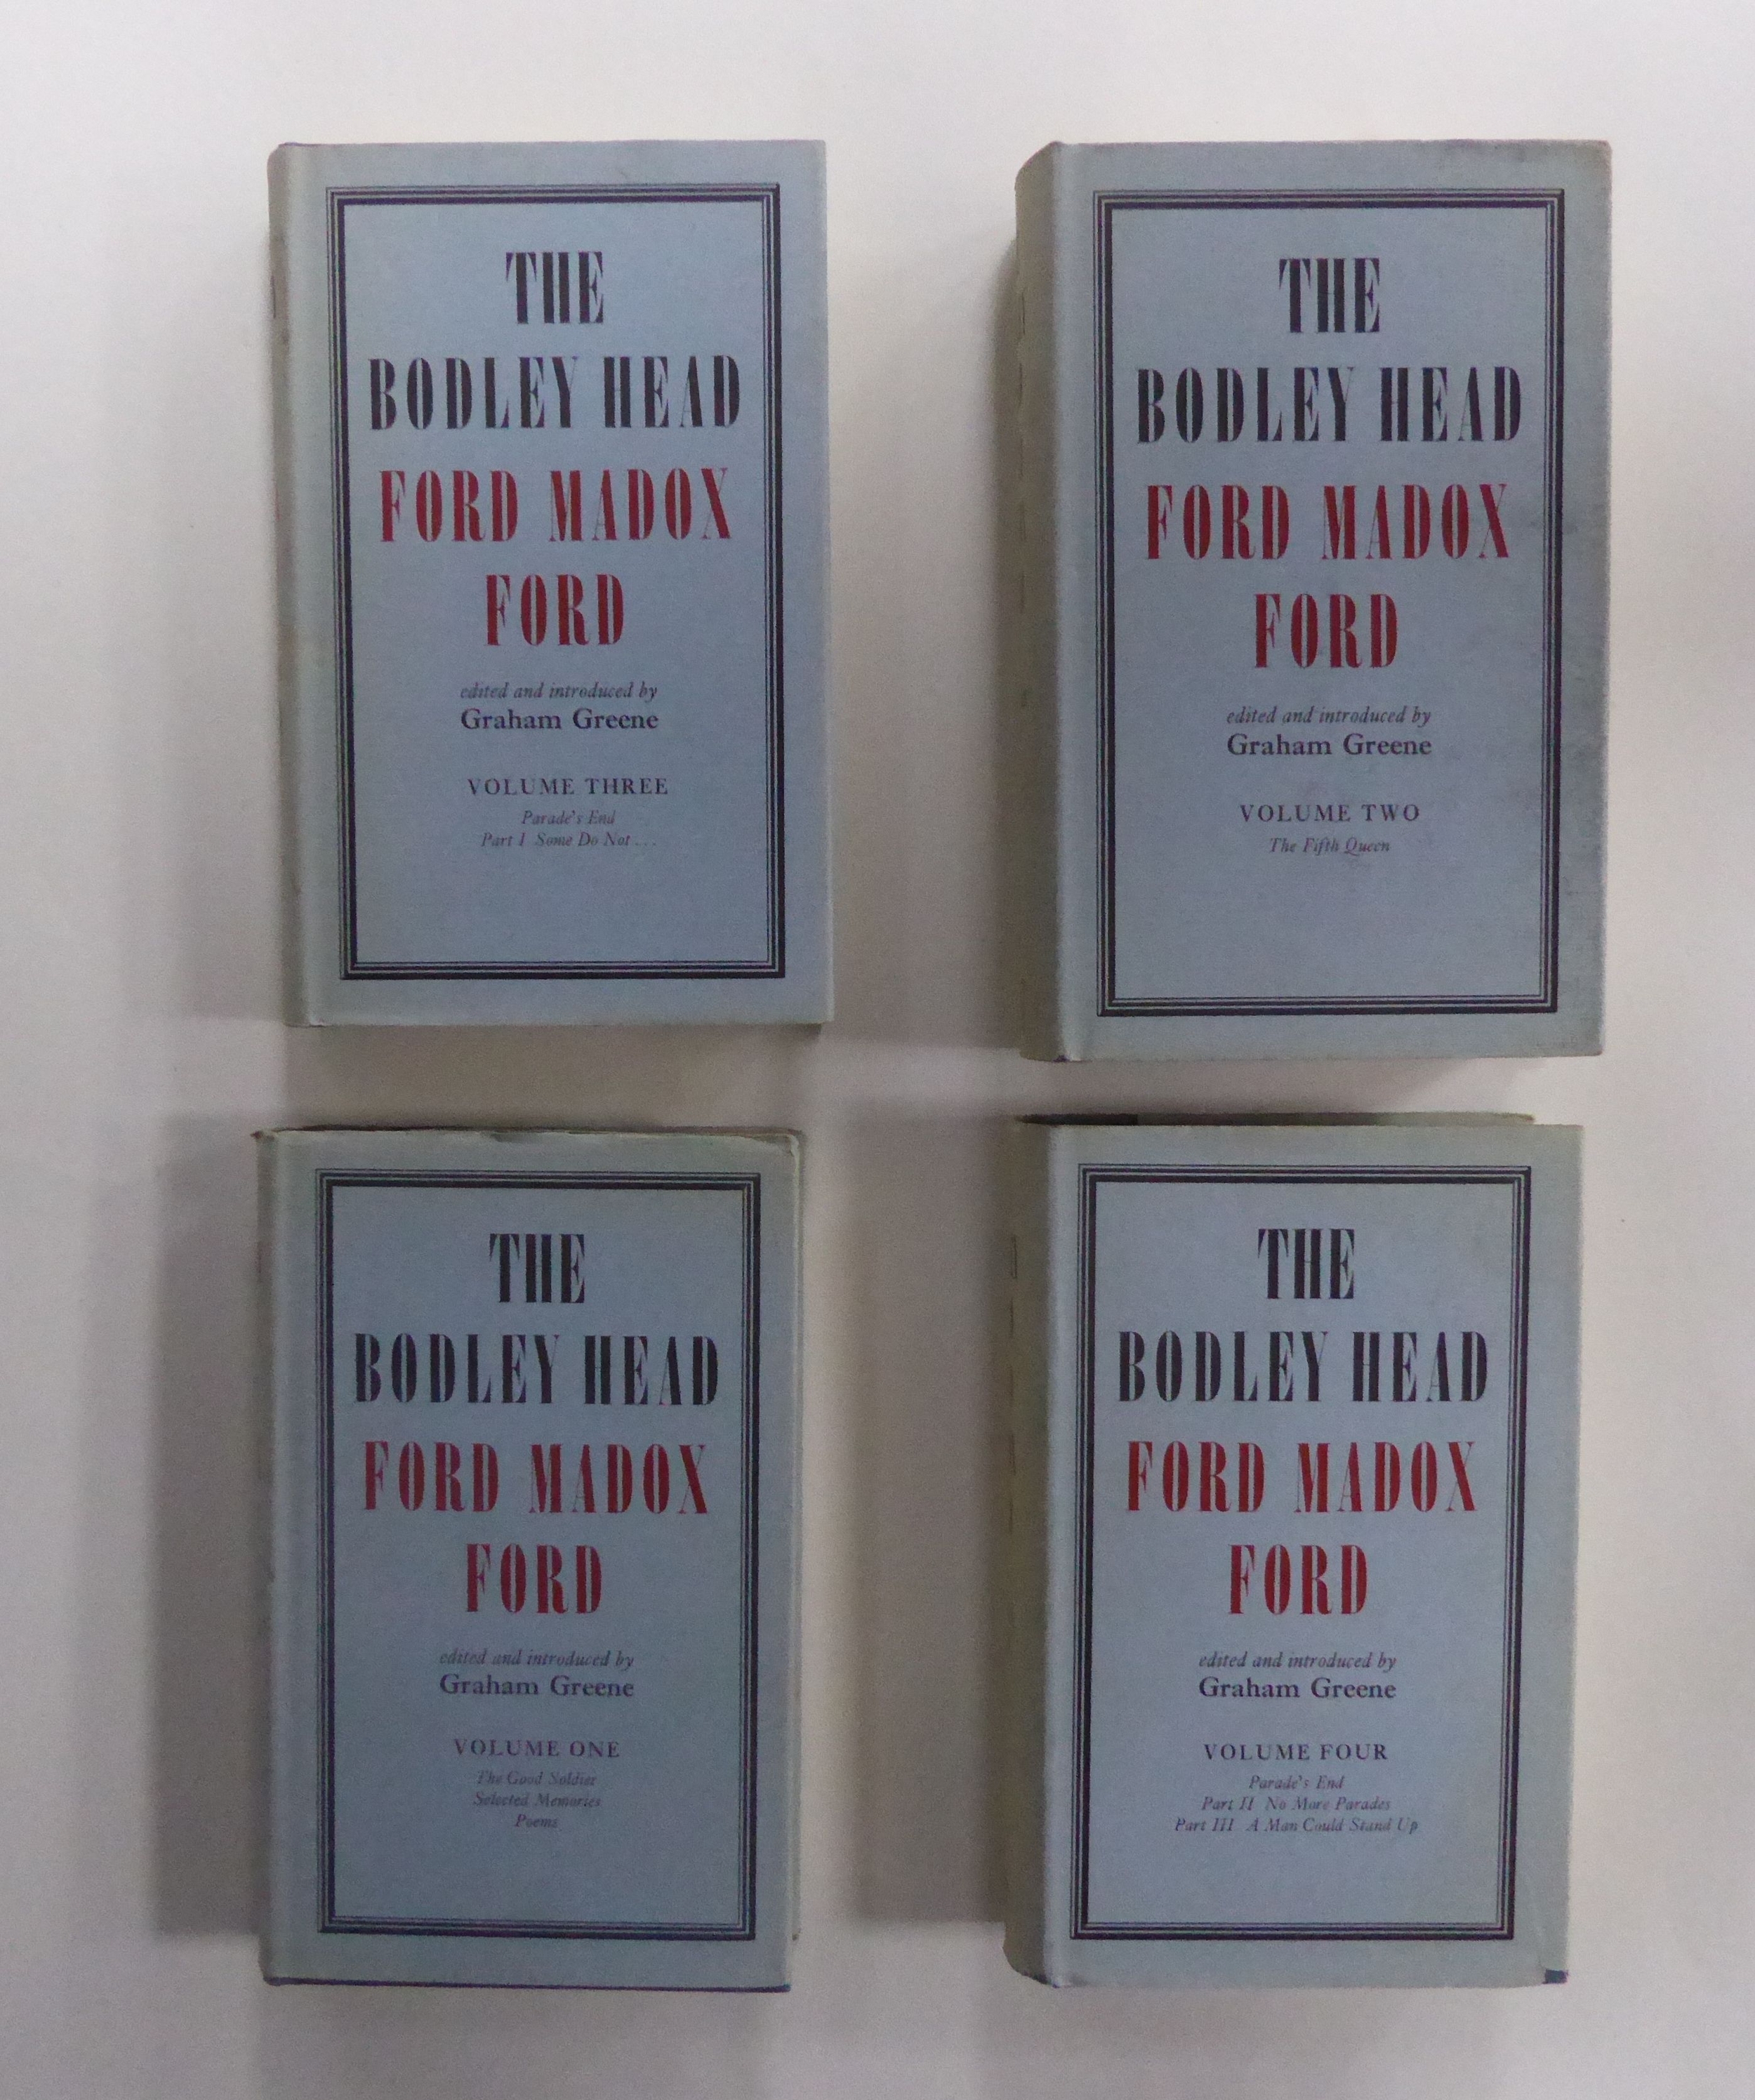 Graham Greene - Ford Maddox Ford, 4 vol, pub Bodley Head, 1980 reprint. All four volumes in